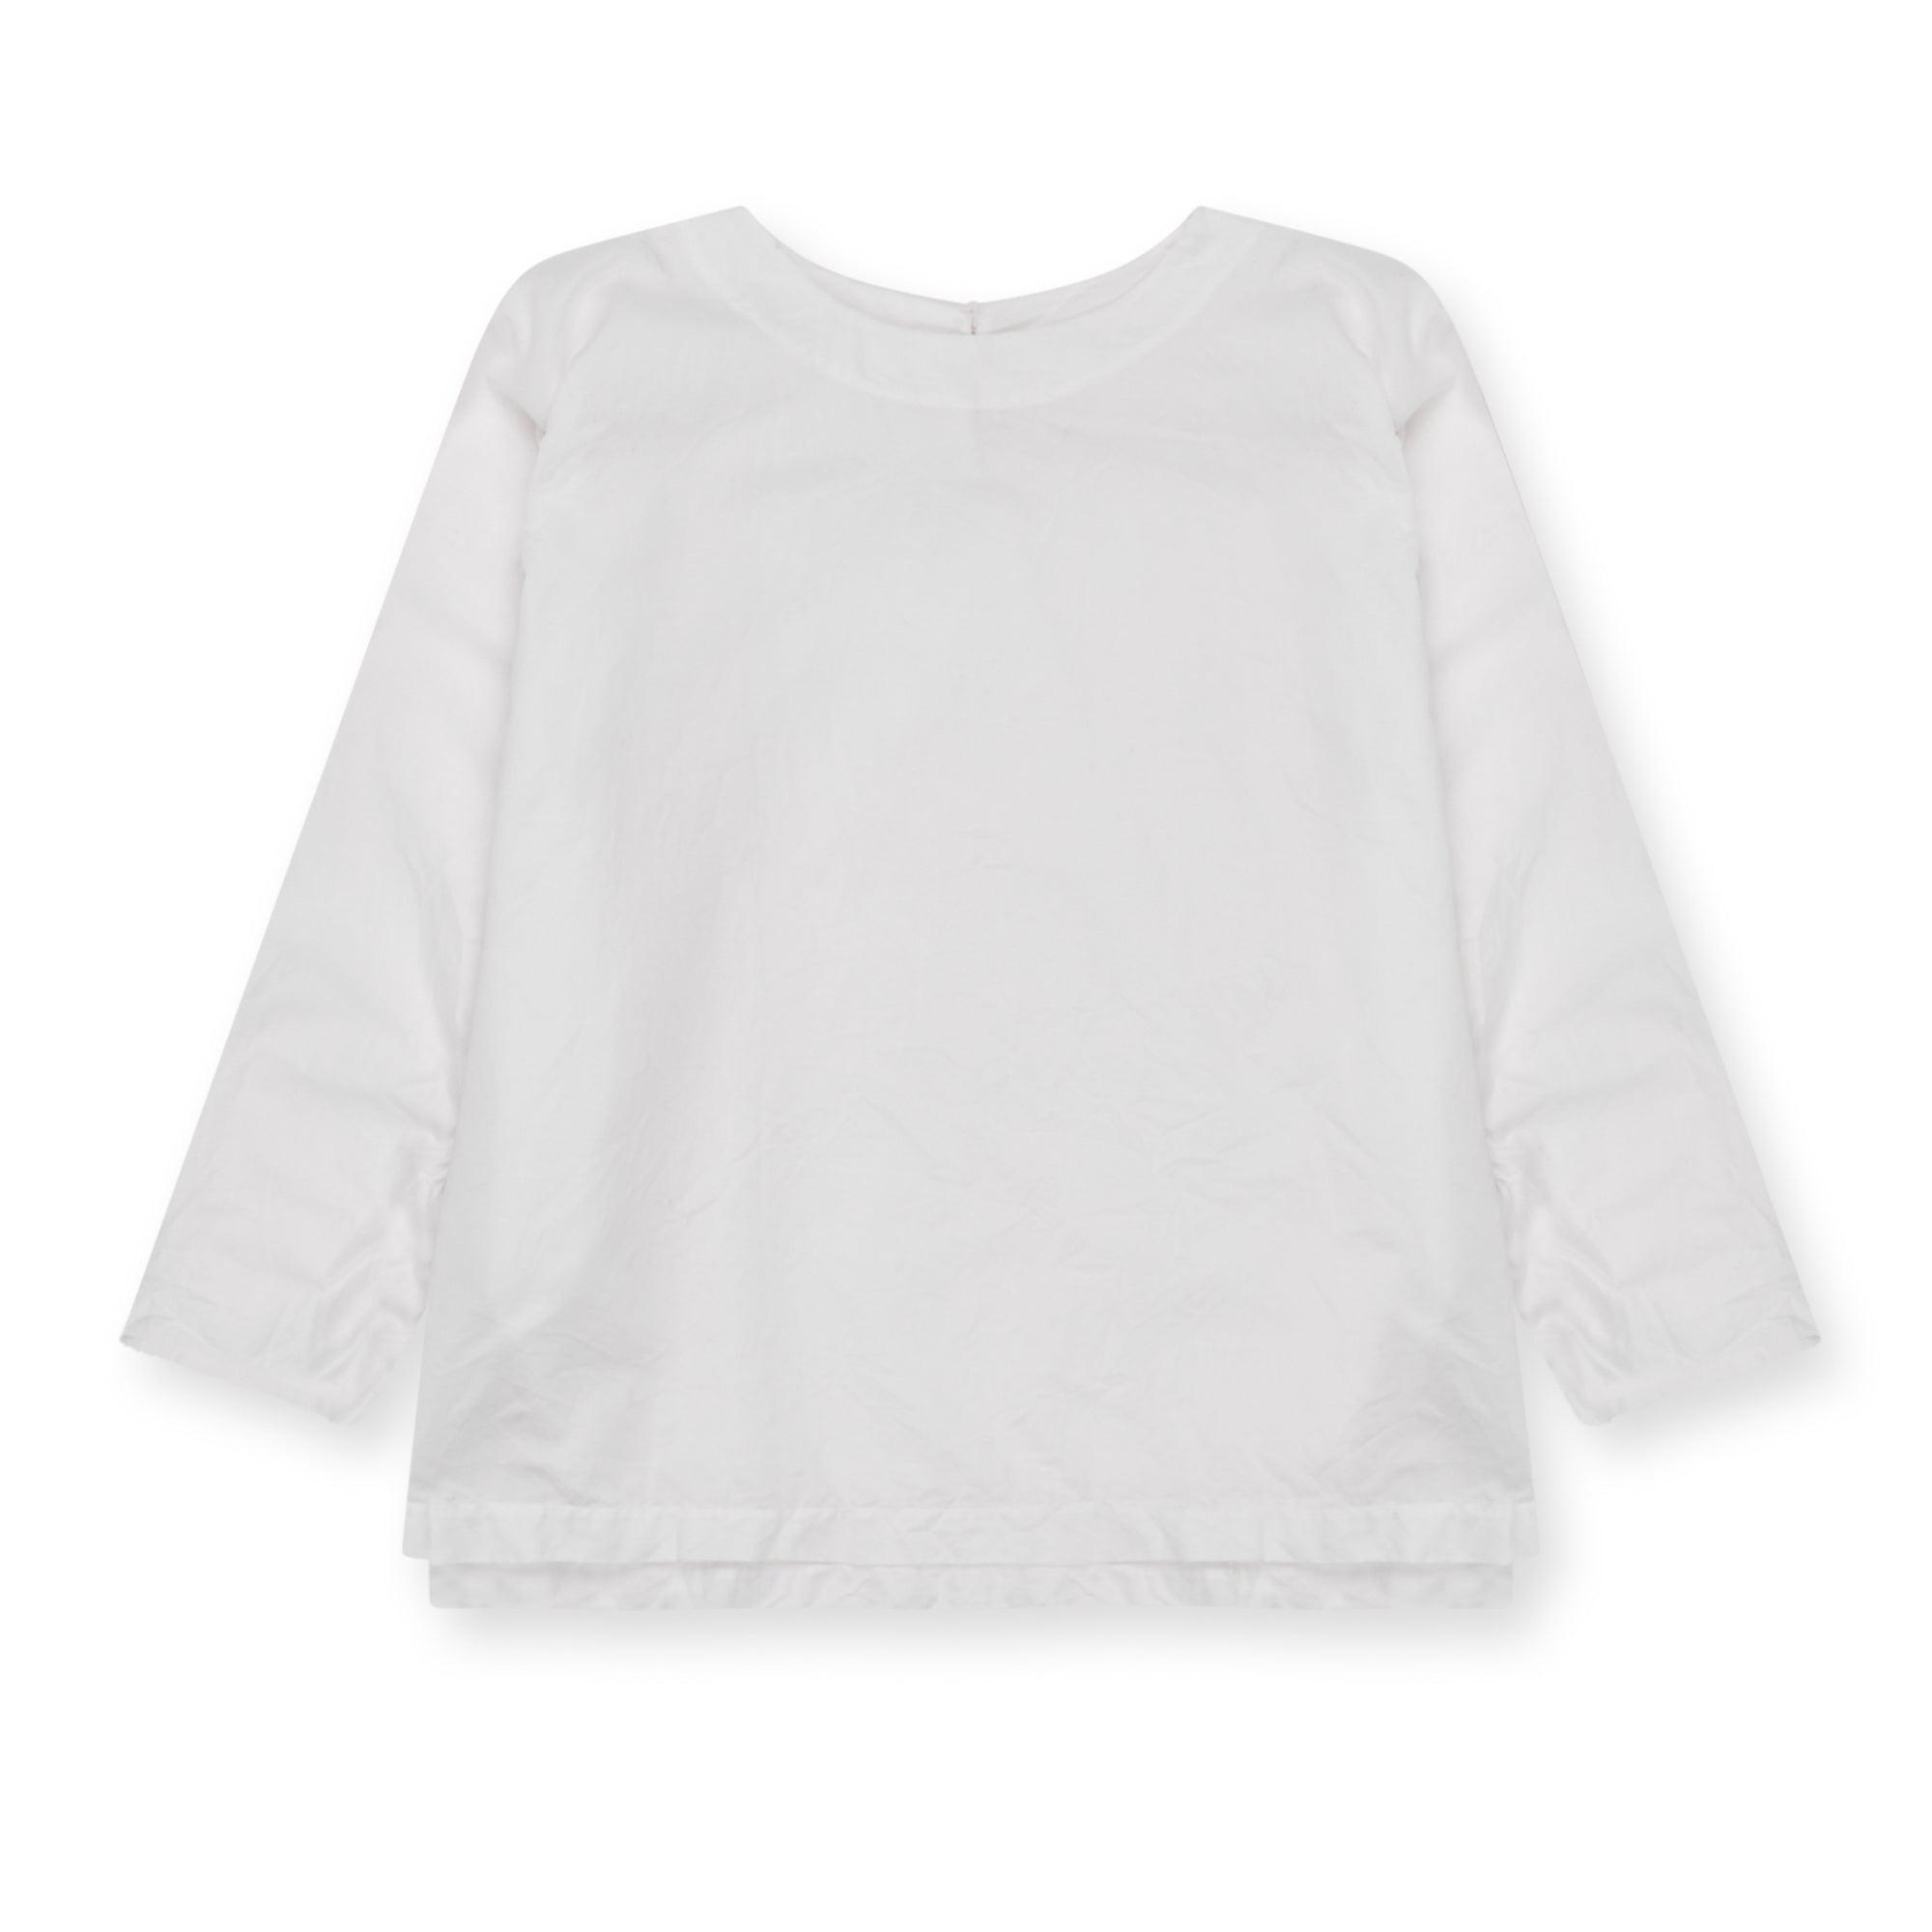 Daniela Gregis Women's Jeroni Shirt (White) by DANIELA GREGIS